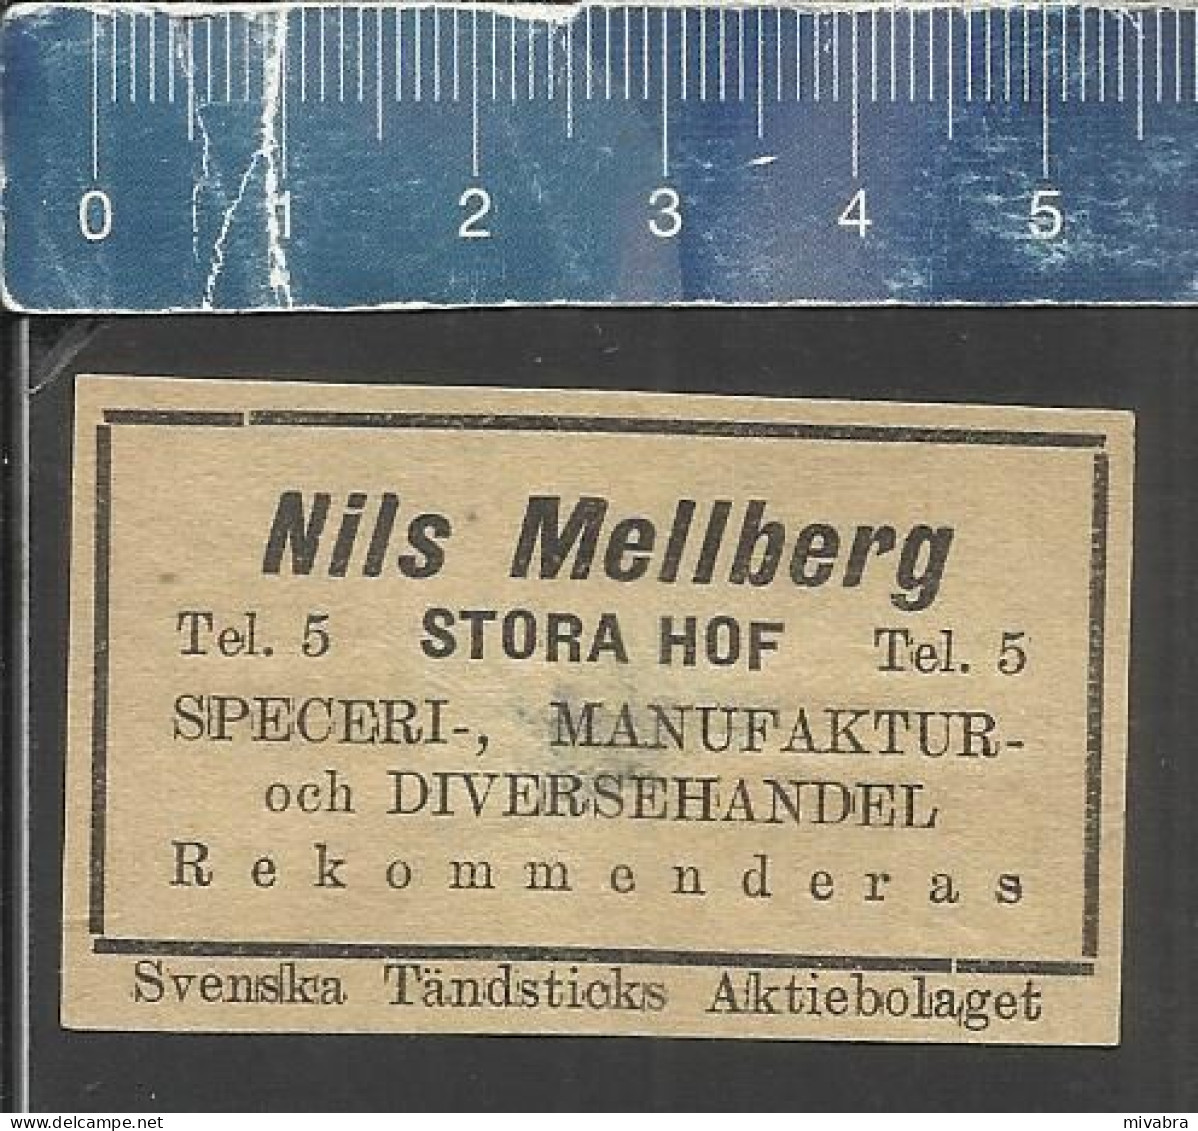 NILS MELLBERG - STORA HOF -  OLD VINTAGE ADVERTISING MATCHBOX LABEL MADE IN SWEDEN SVENSKA TÄNDSTICKS A B - Scatole Di Fiammiferi - Etichette